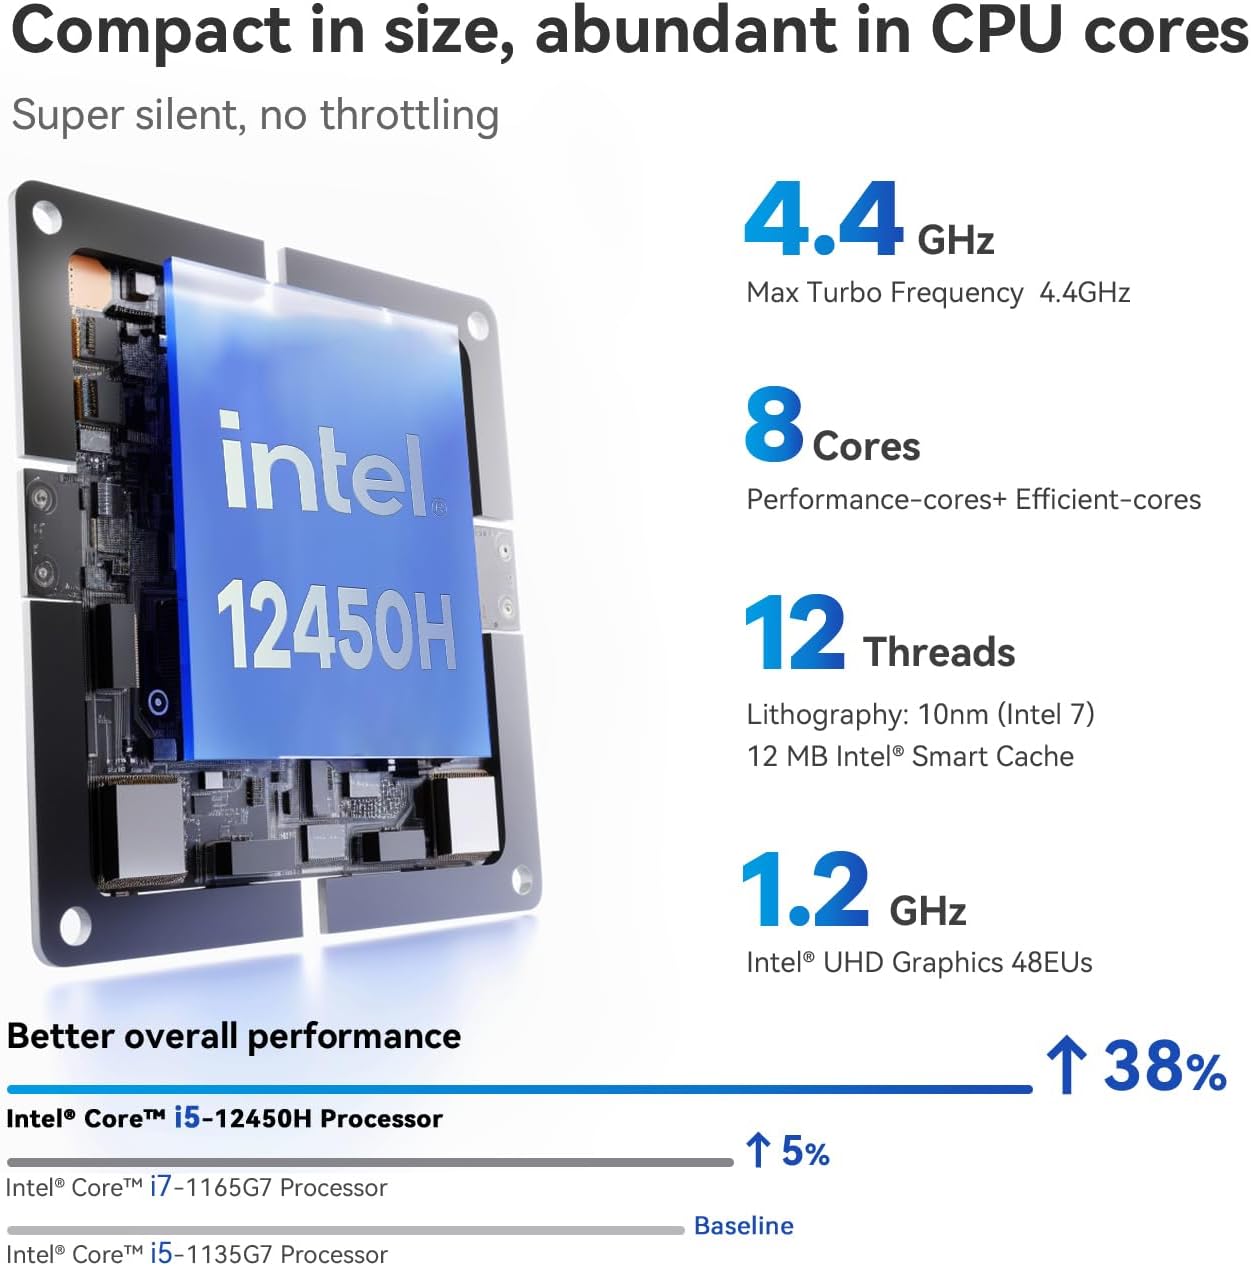 Beelink New Intel 4 Cores 8 Thread i5-8279U Processor(up to 4.1GHz), Mini pc with 16G DDR4 RAM/500GB NVMe M.2 SSD,Support 4K HD Dual HDMI Display,WiFi5,BT5.0,4*USB3.0,Gigabit Ethernet